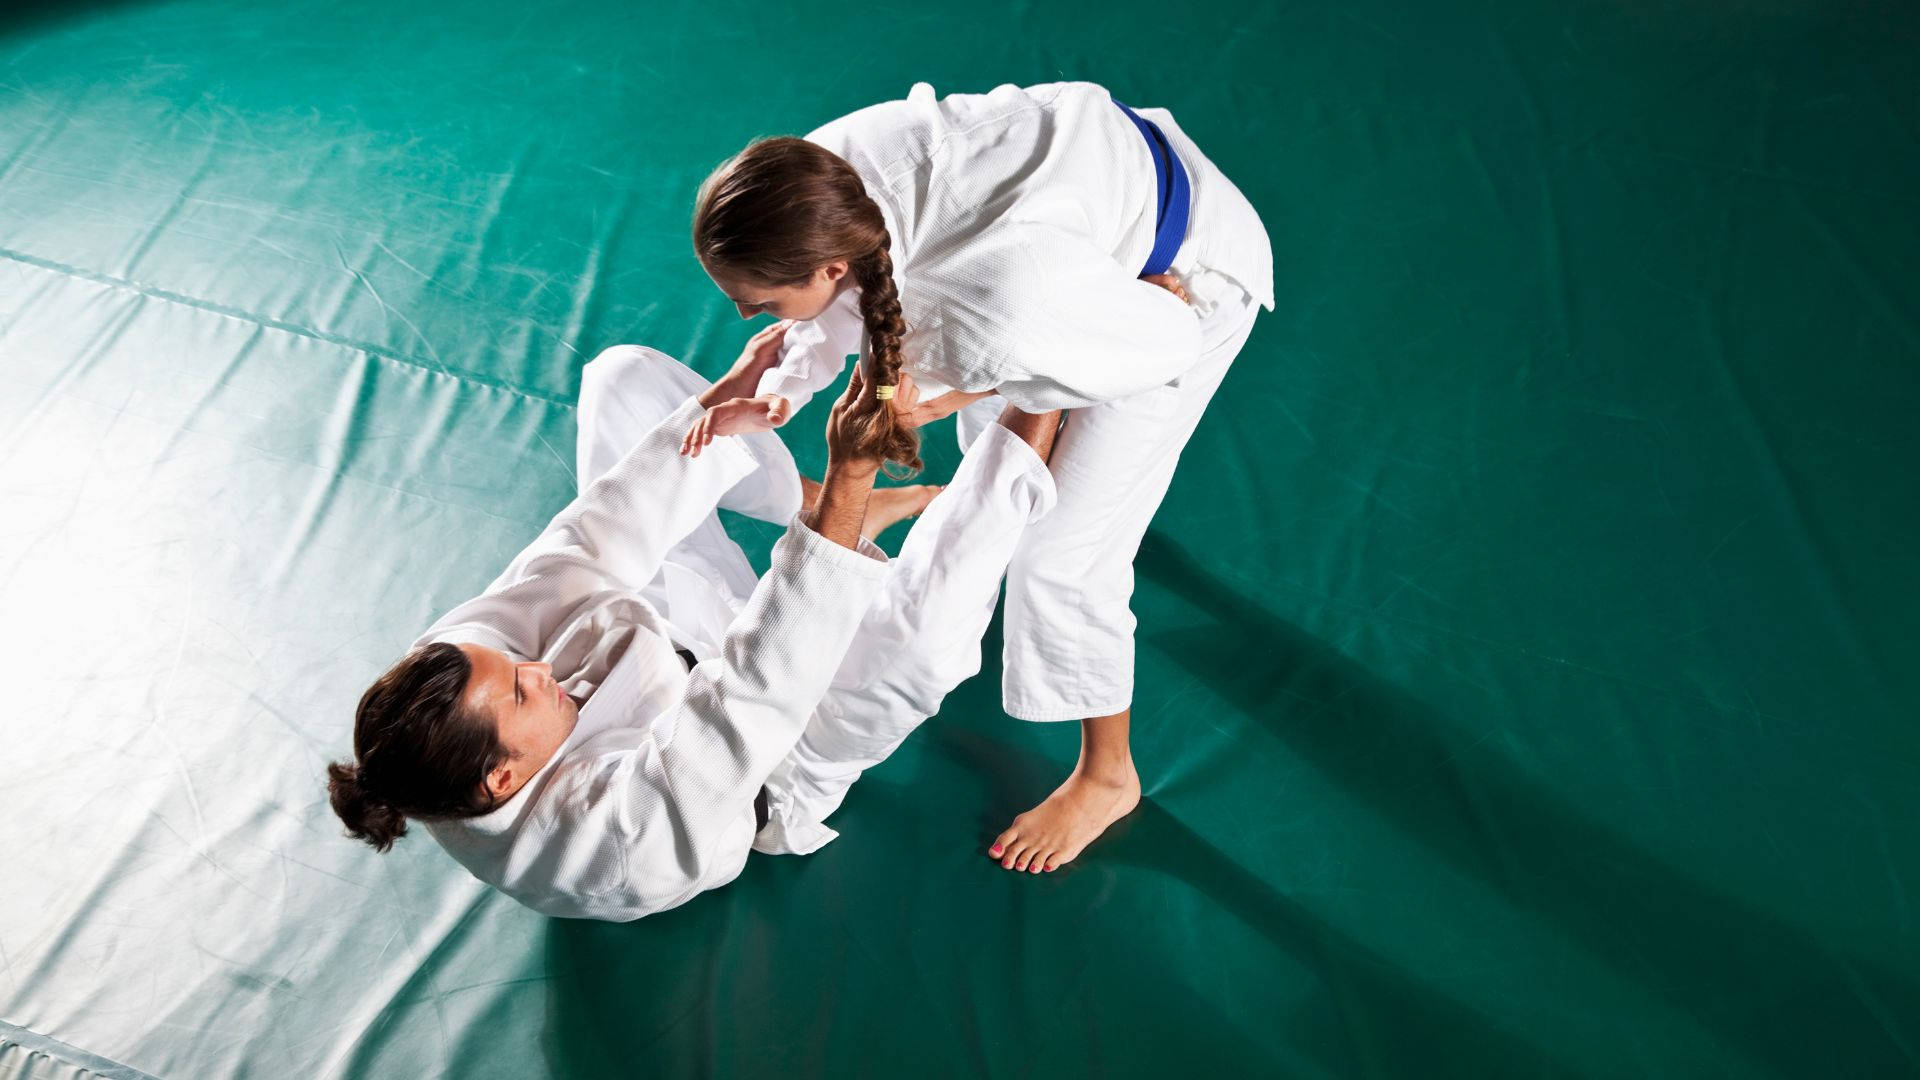 A Captivating Demonstration Of Brazilian Jiu-jitsu Prowess By Both Men And Women Contenders.